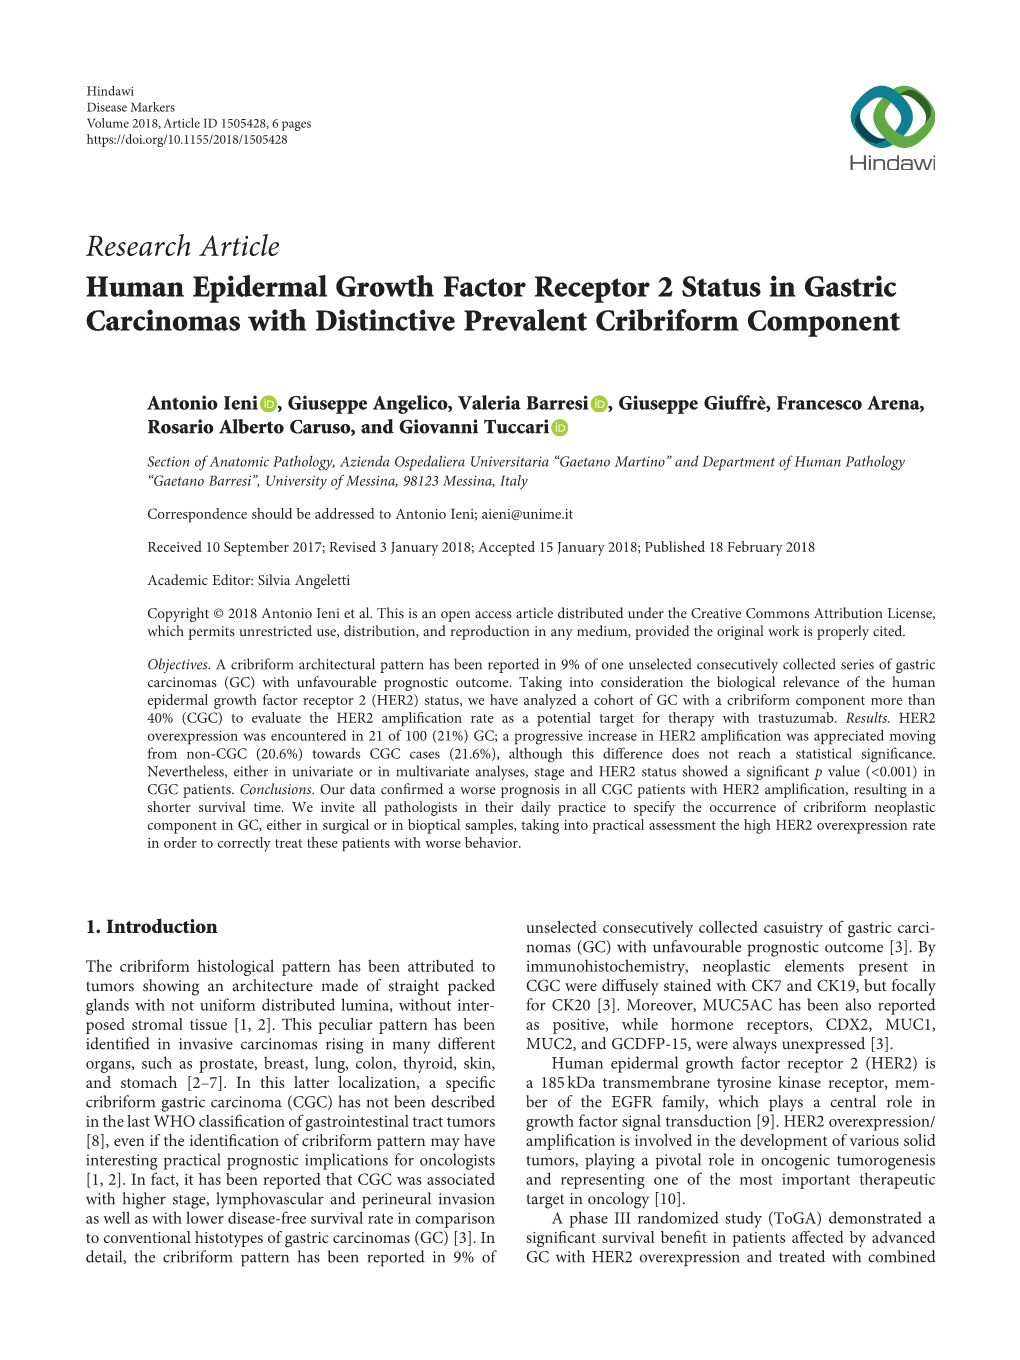 Human Epidermal Growth Factor Receptor 2 Status in Gastric Carcinomas with Distinctive Prevalent Cribriform Component